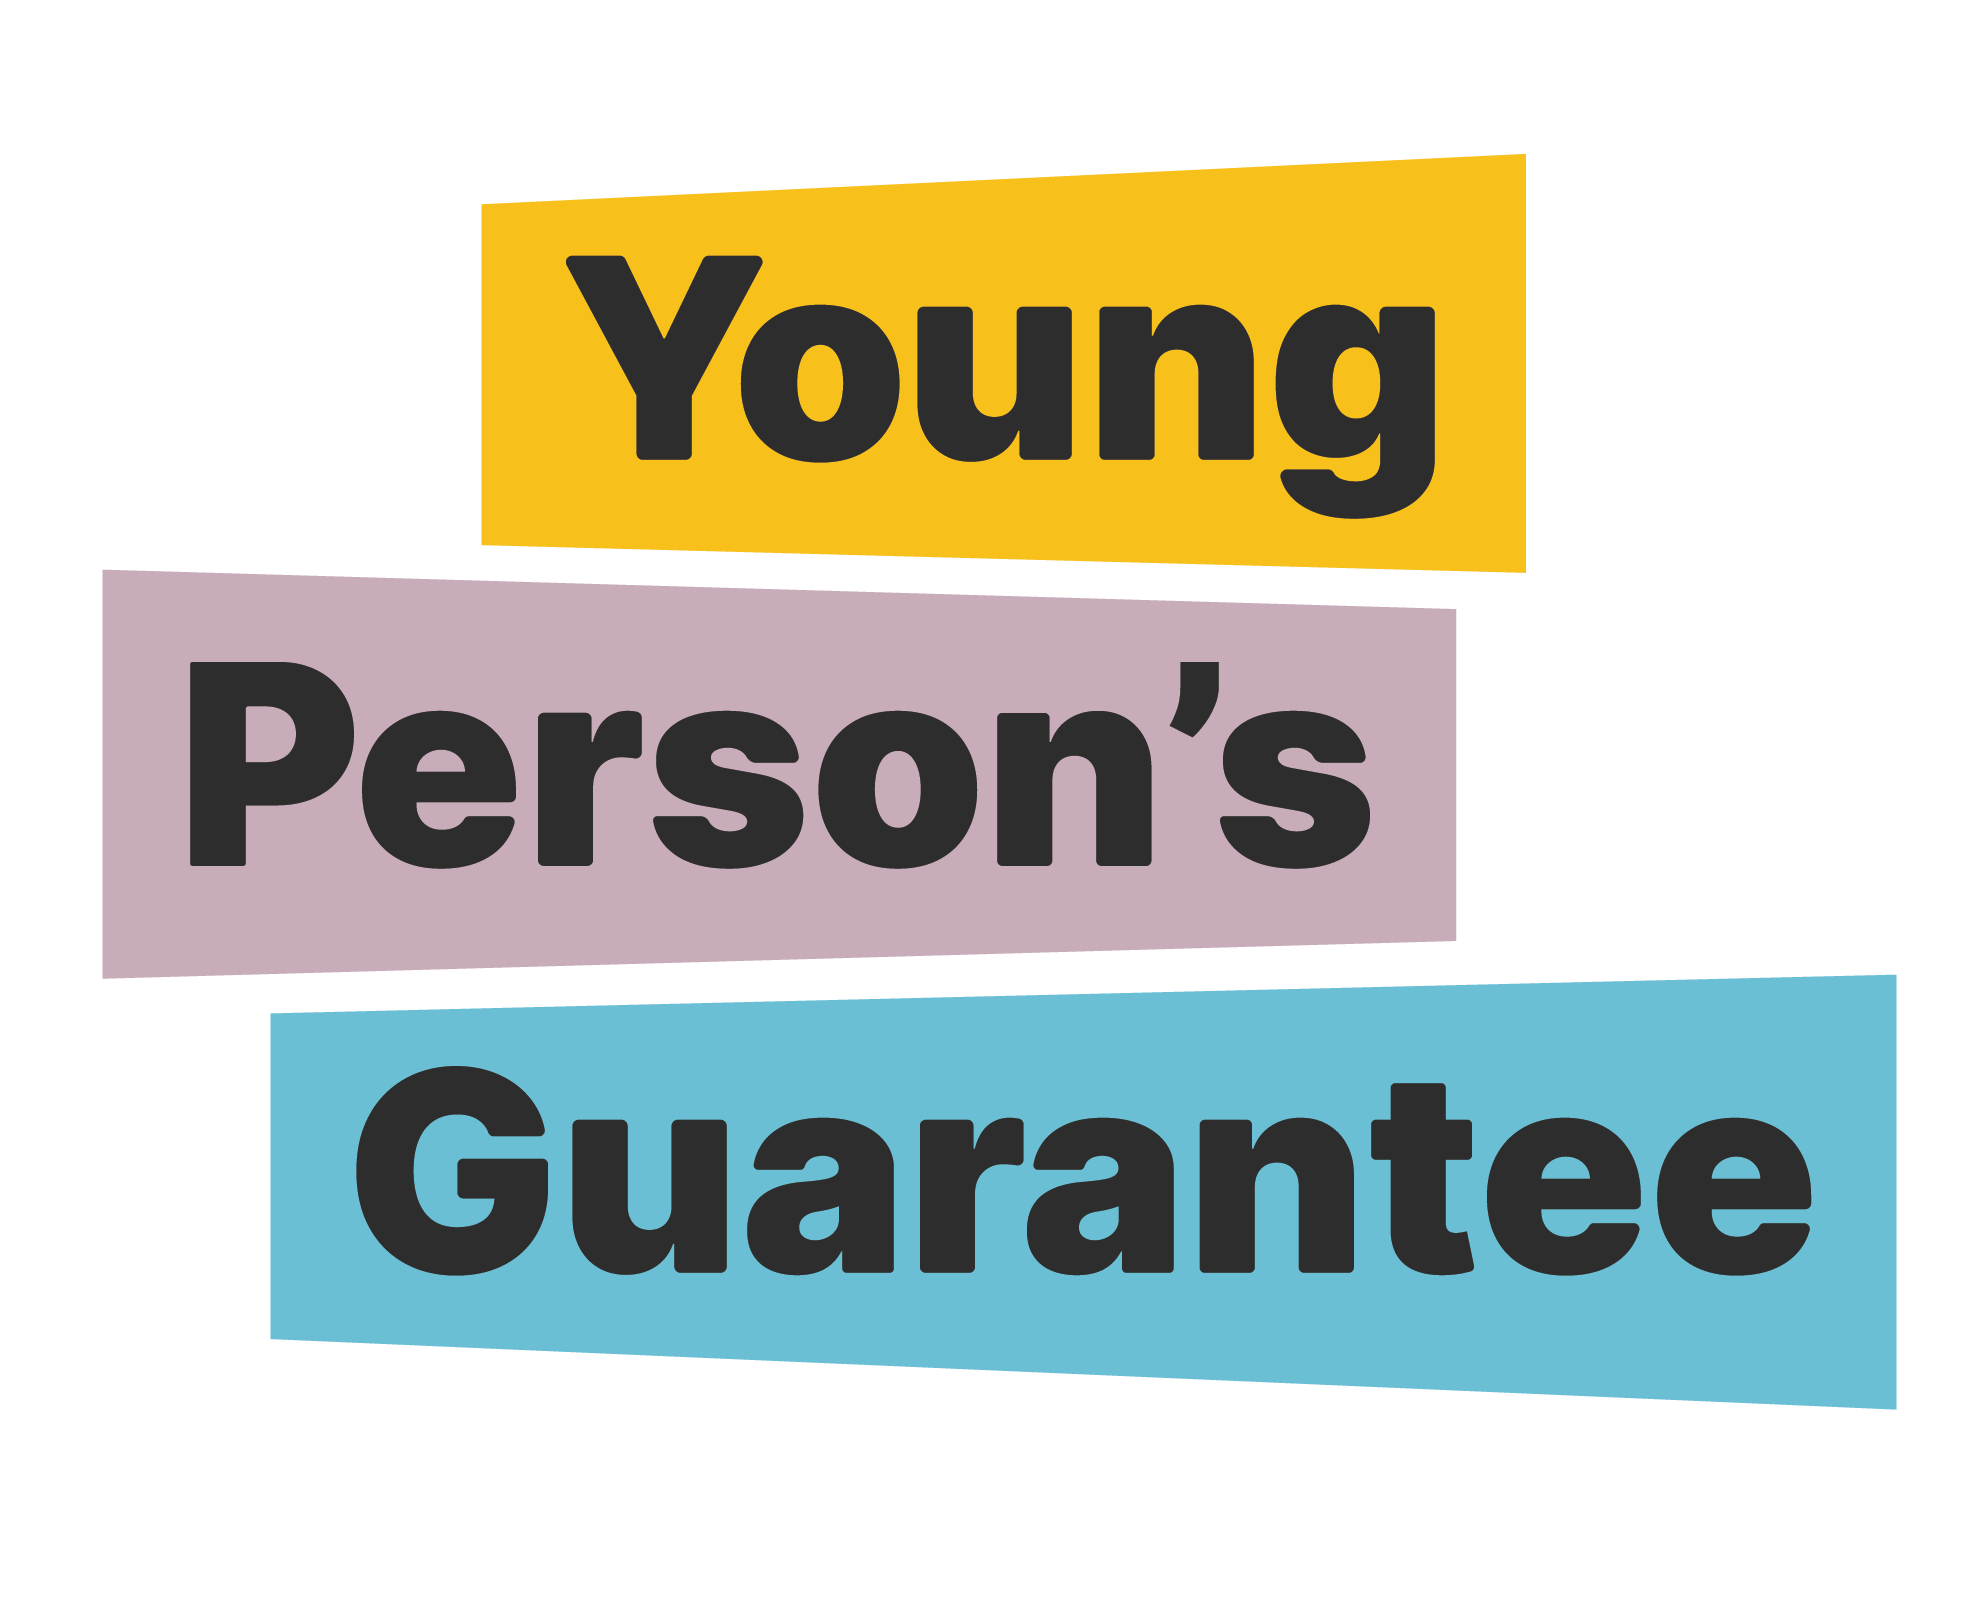 Young Person's Guarantee logo